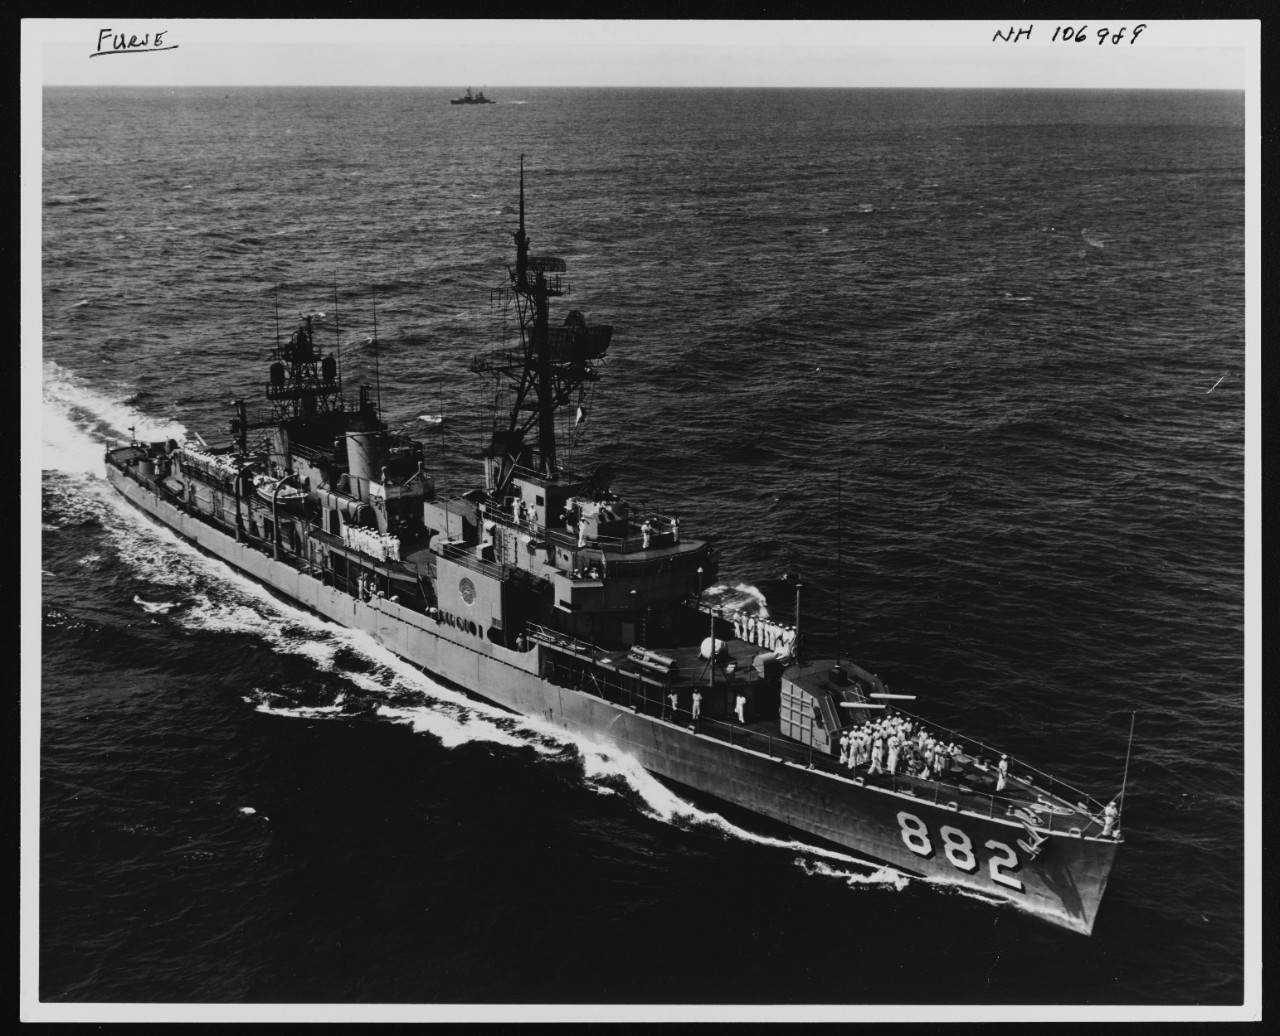 Photo # NH 106989  USS Furse